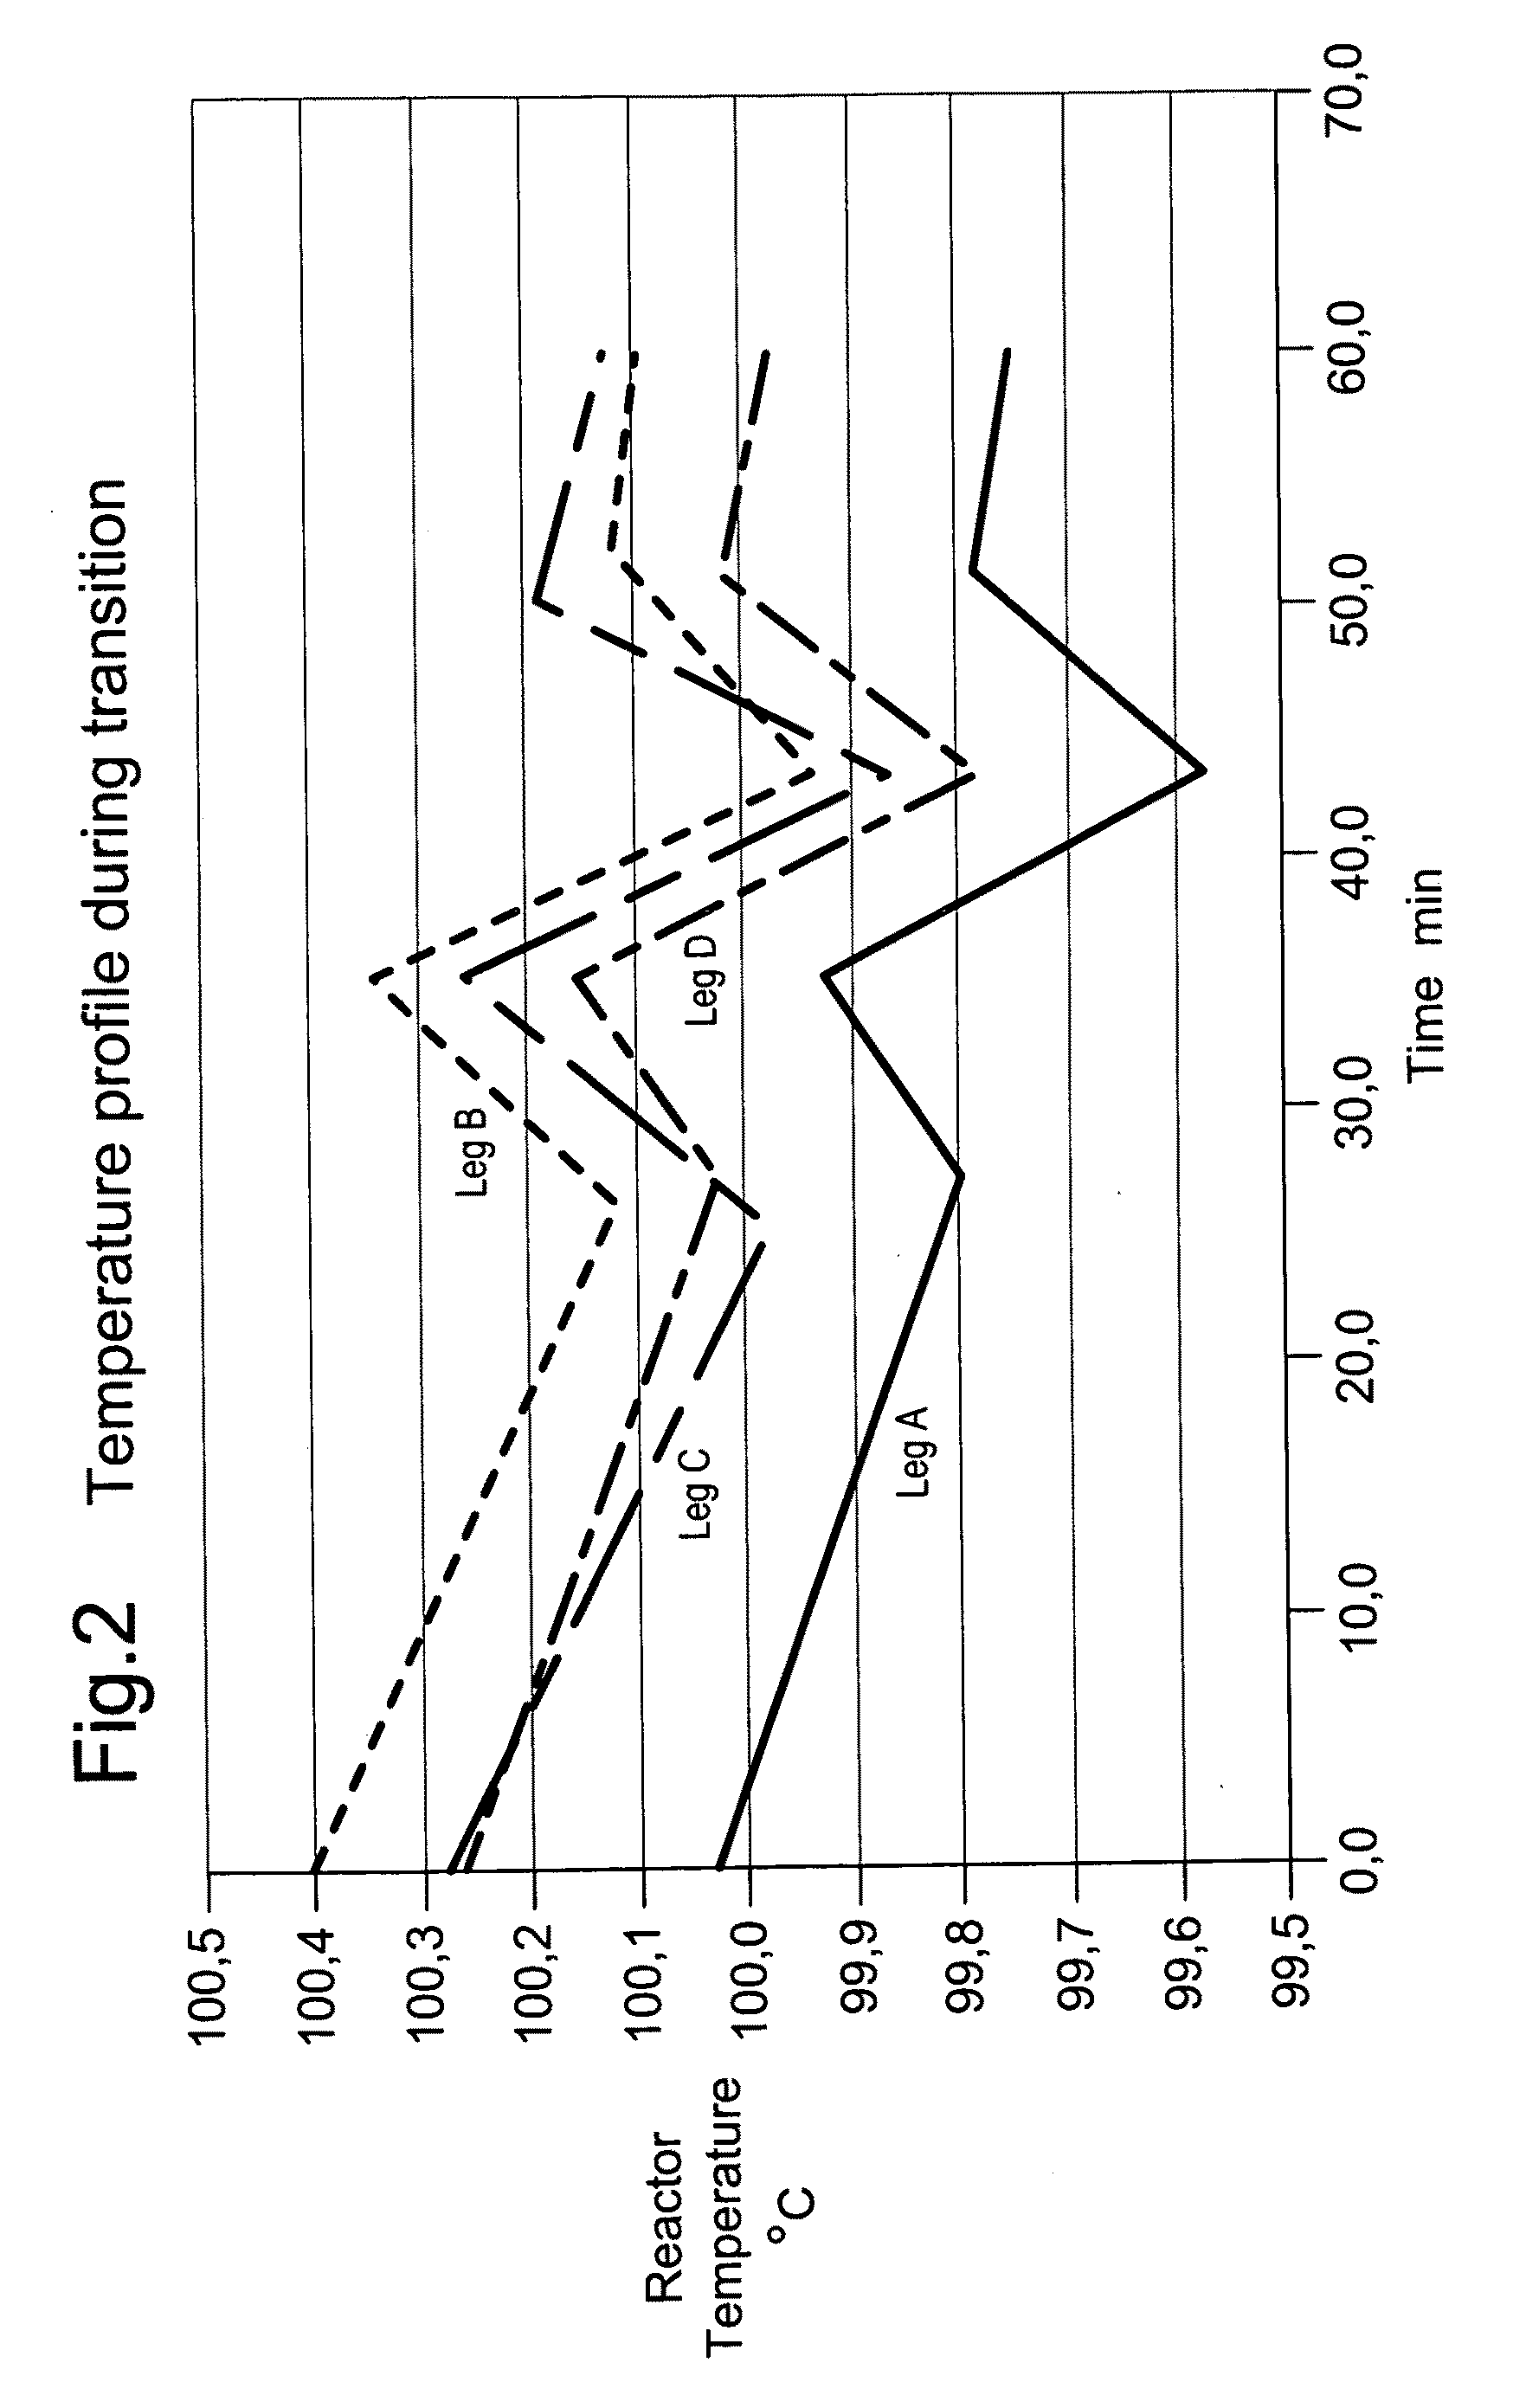 Slurry phase polymerisation process